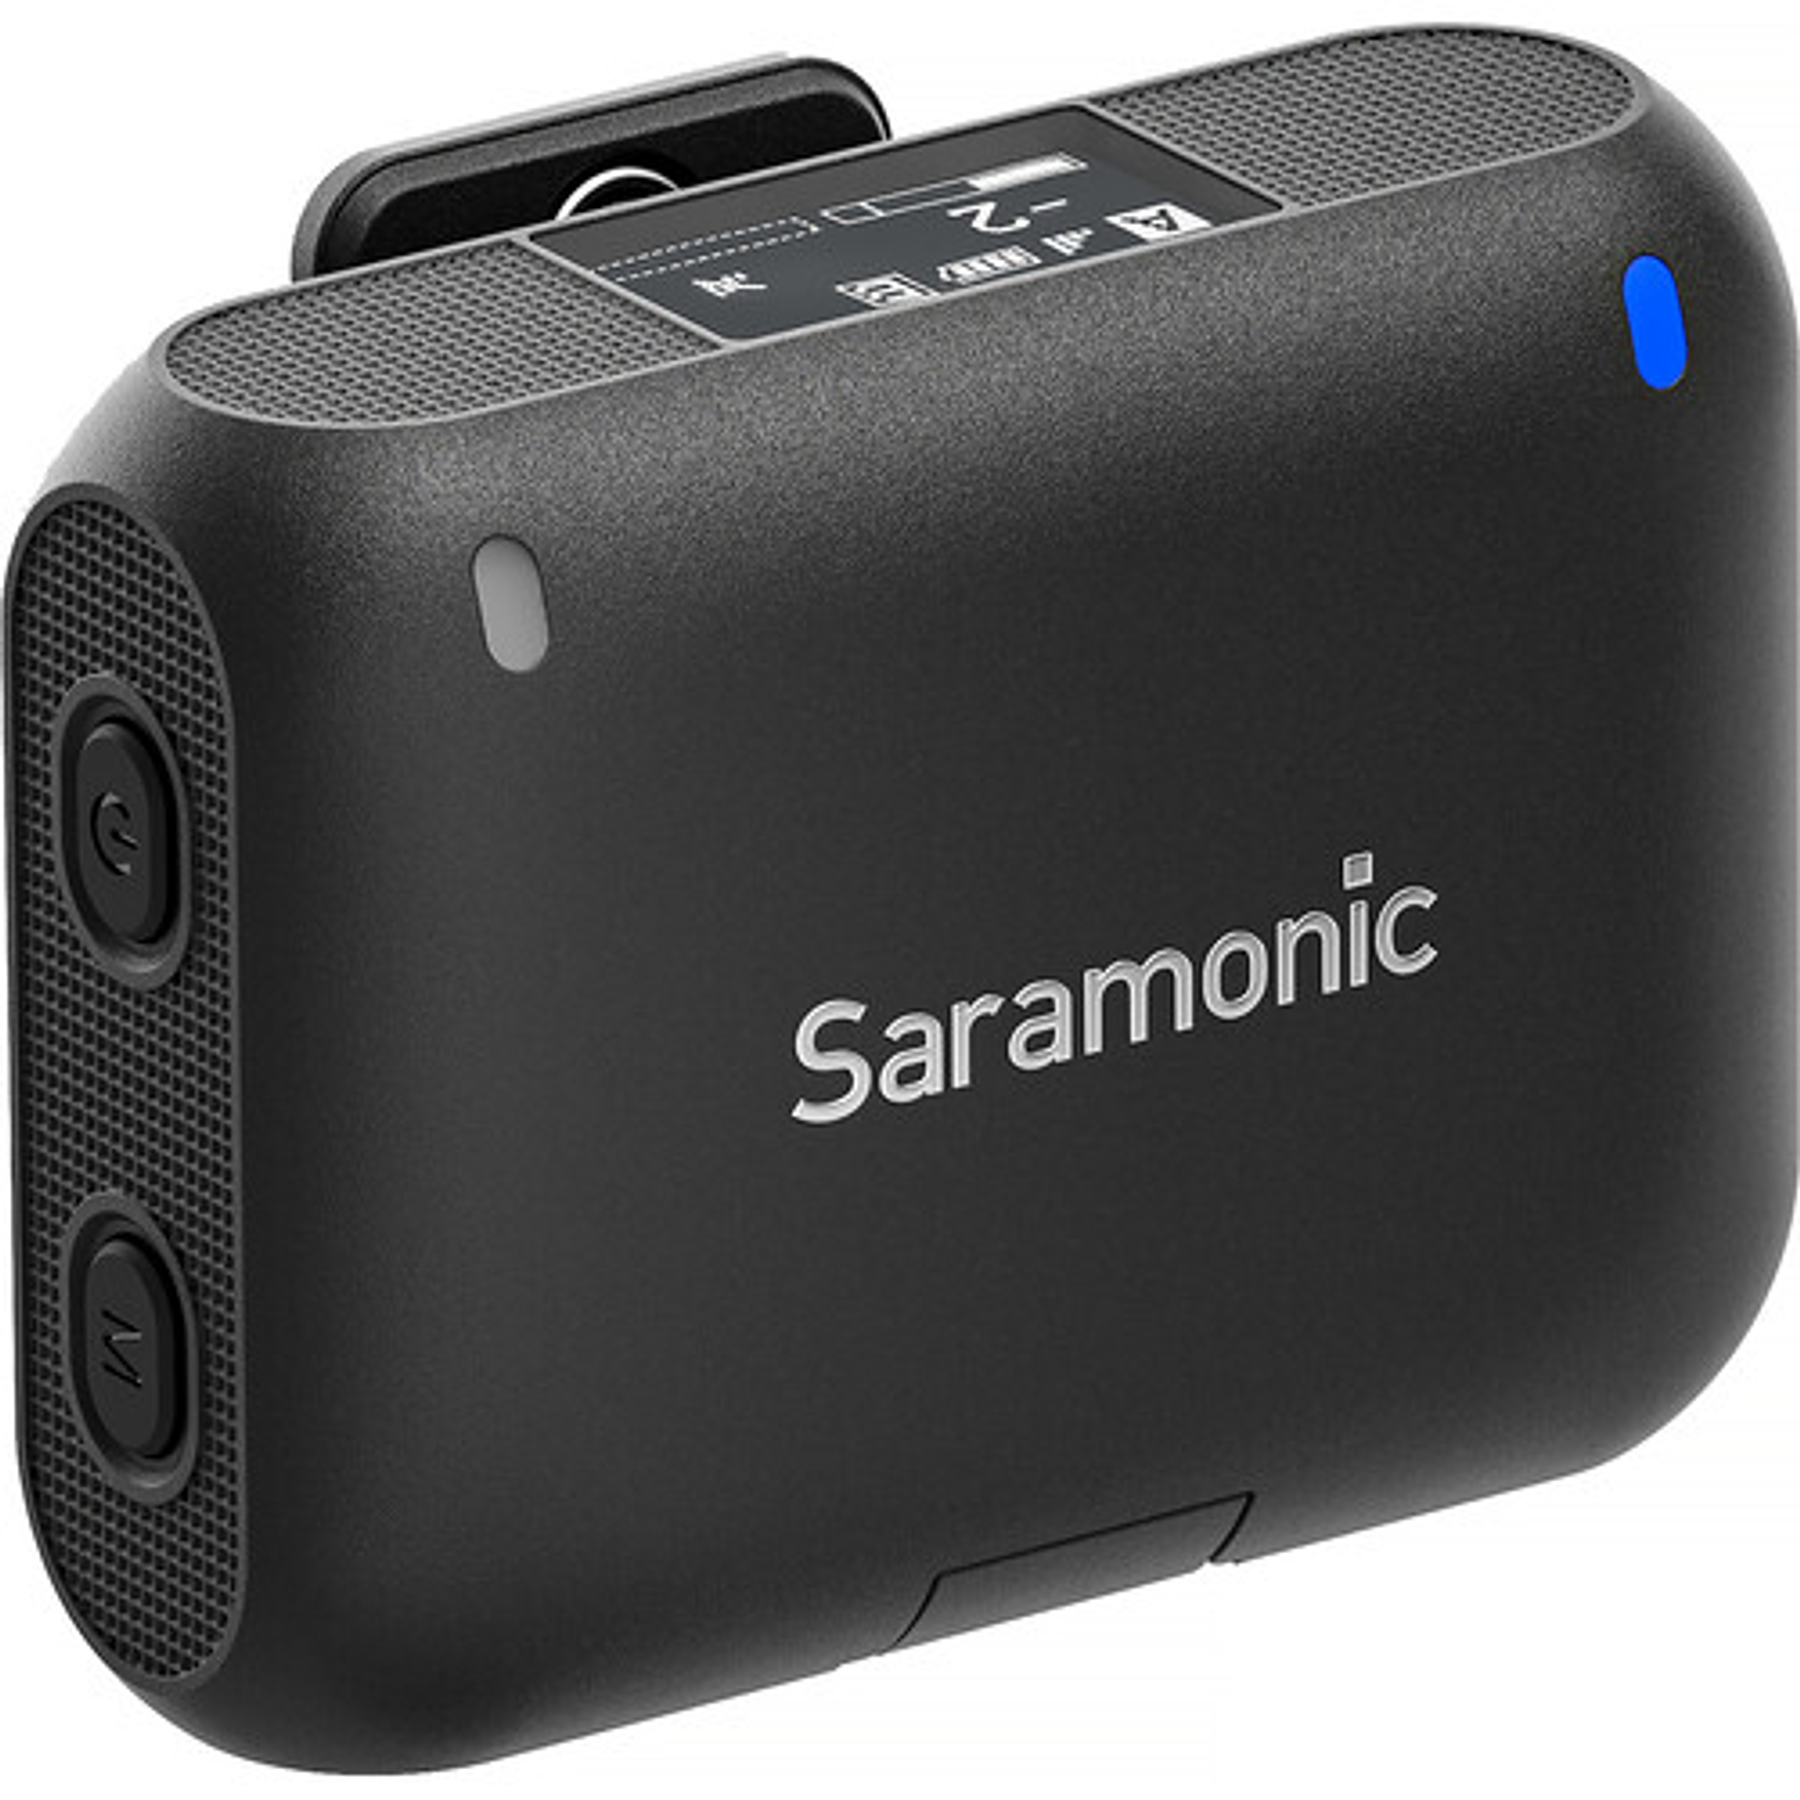 Saramonic Blink 500 B2+ Sistema de micrófono con clip inalámbrico para 2 personas, cámaras y dispositivos móviles (2,4 GHz)